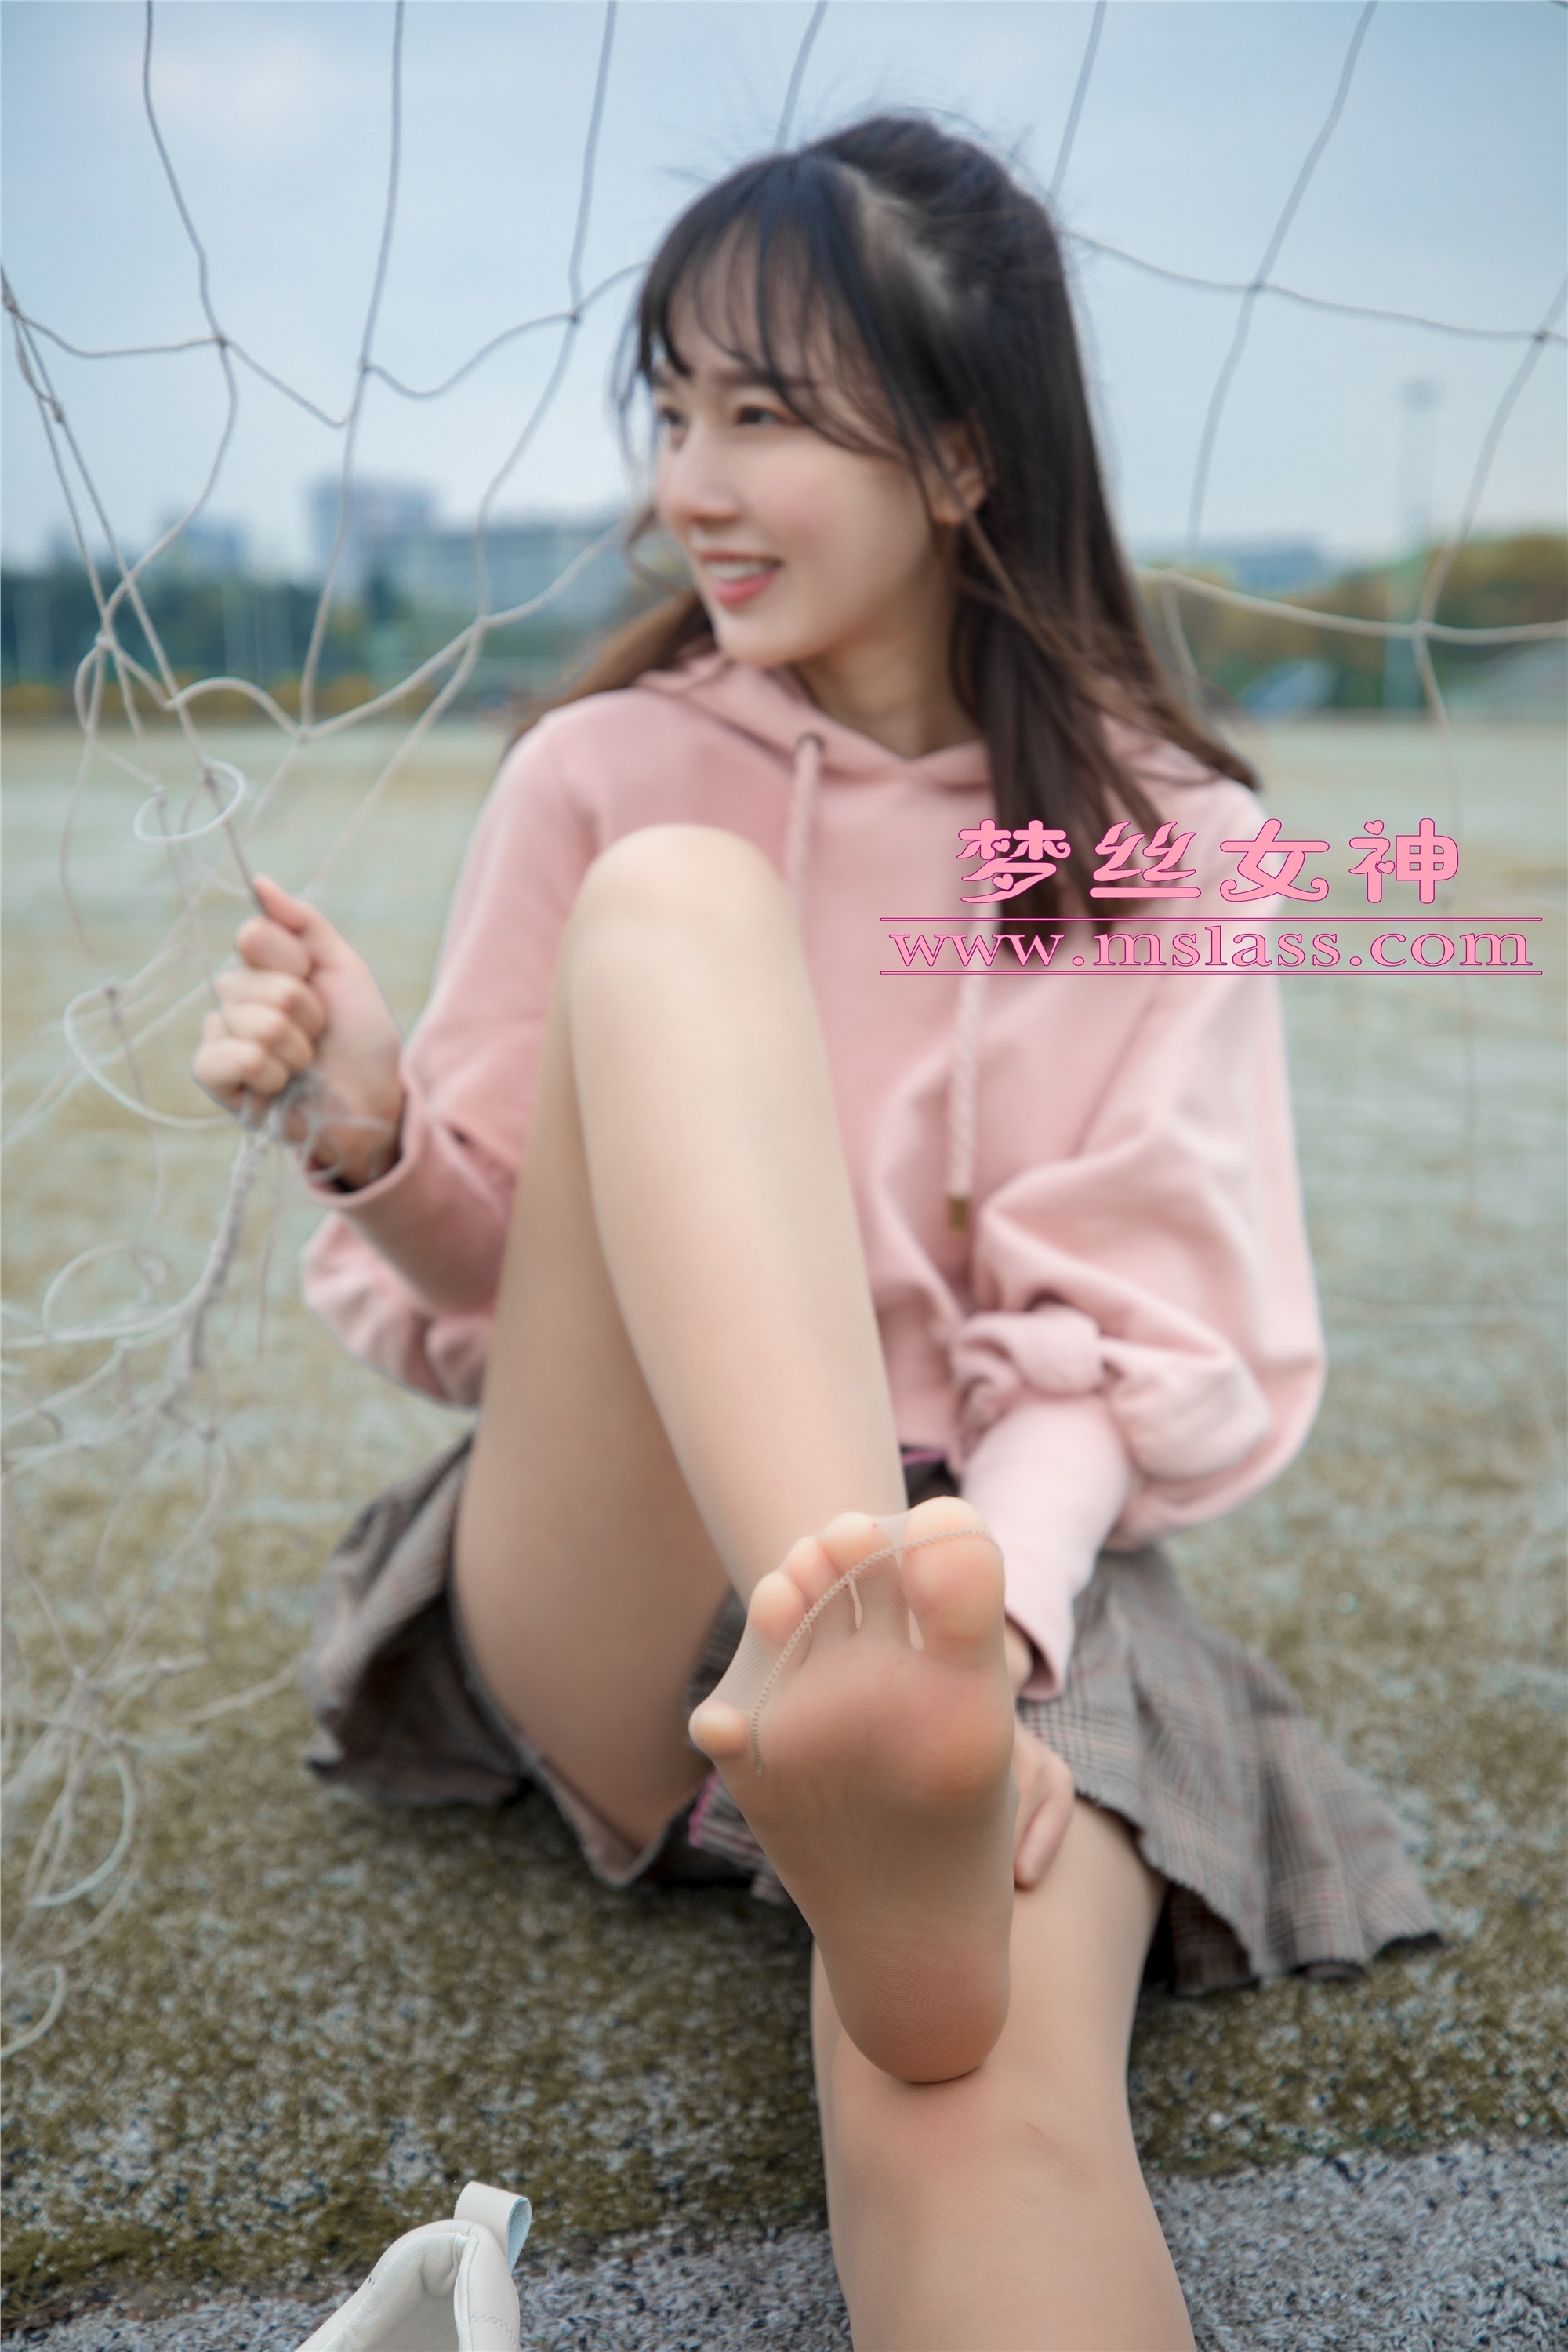 Mslass dream Goddess - Yue Yue playground sweetheart